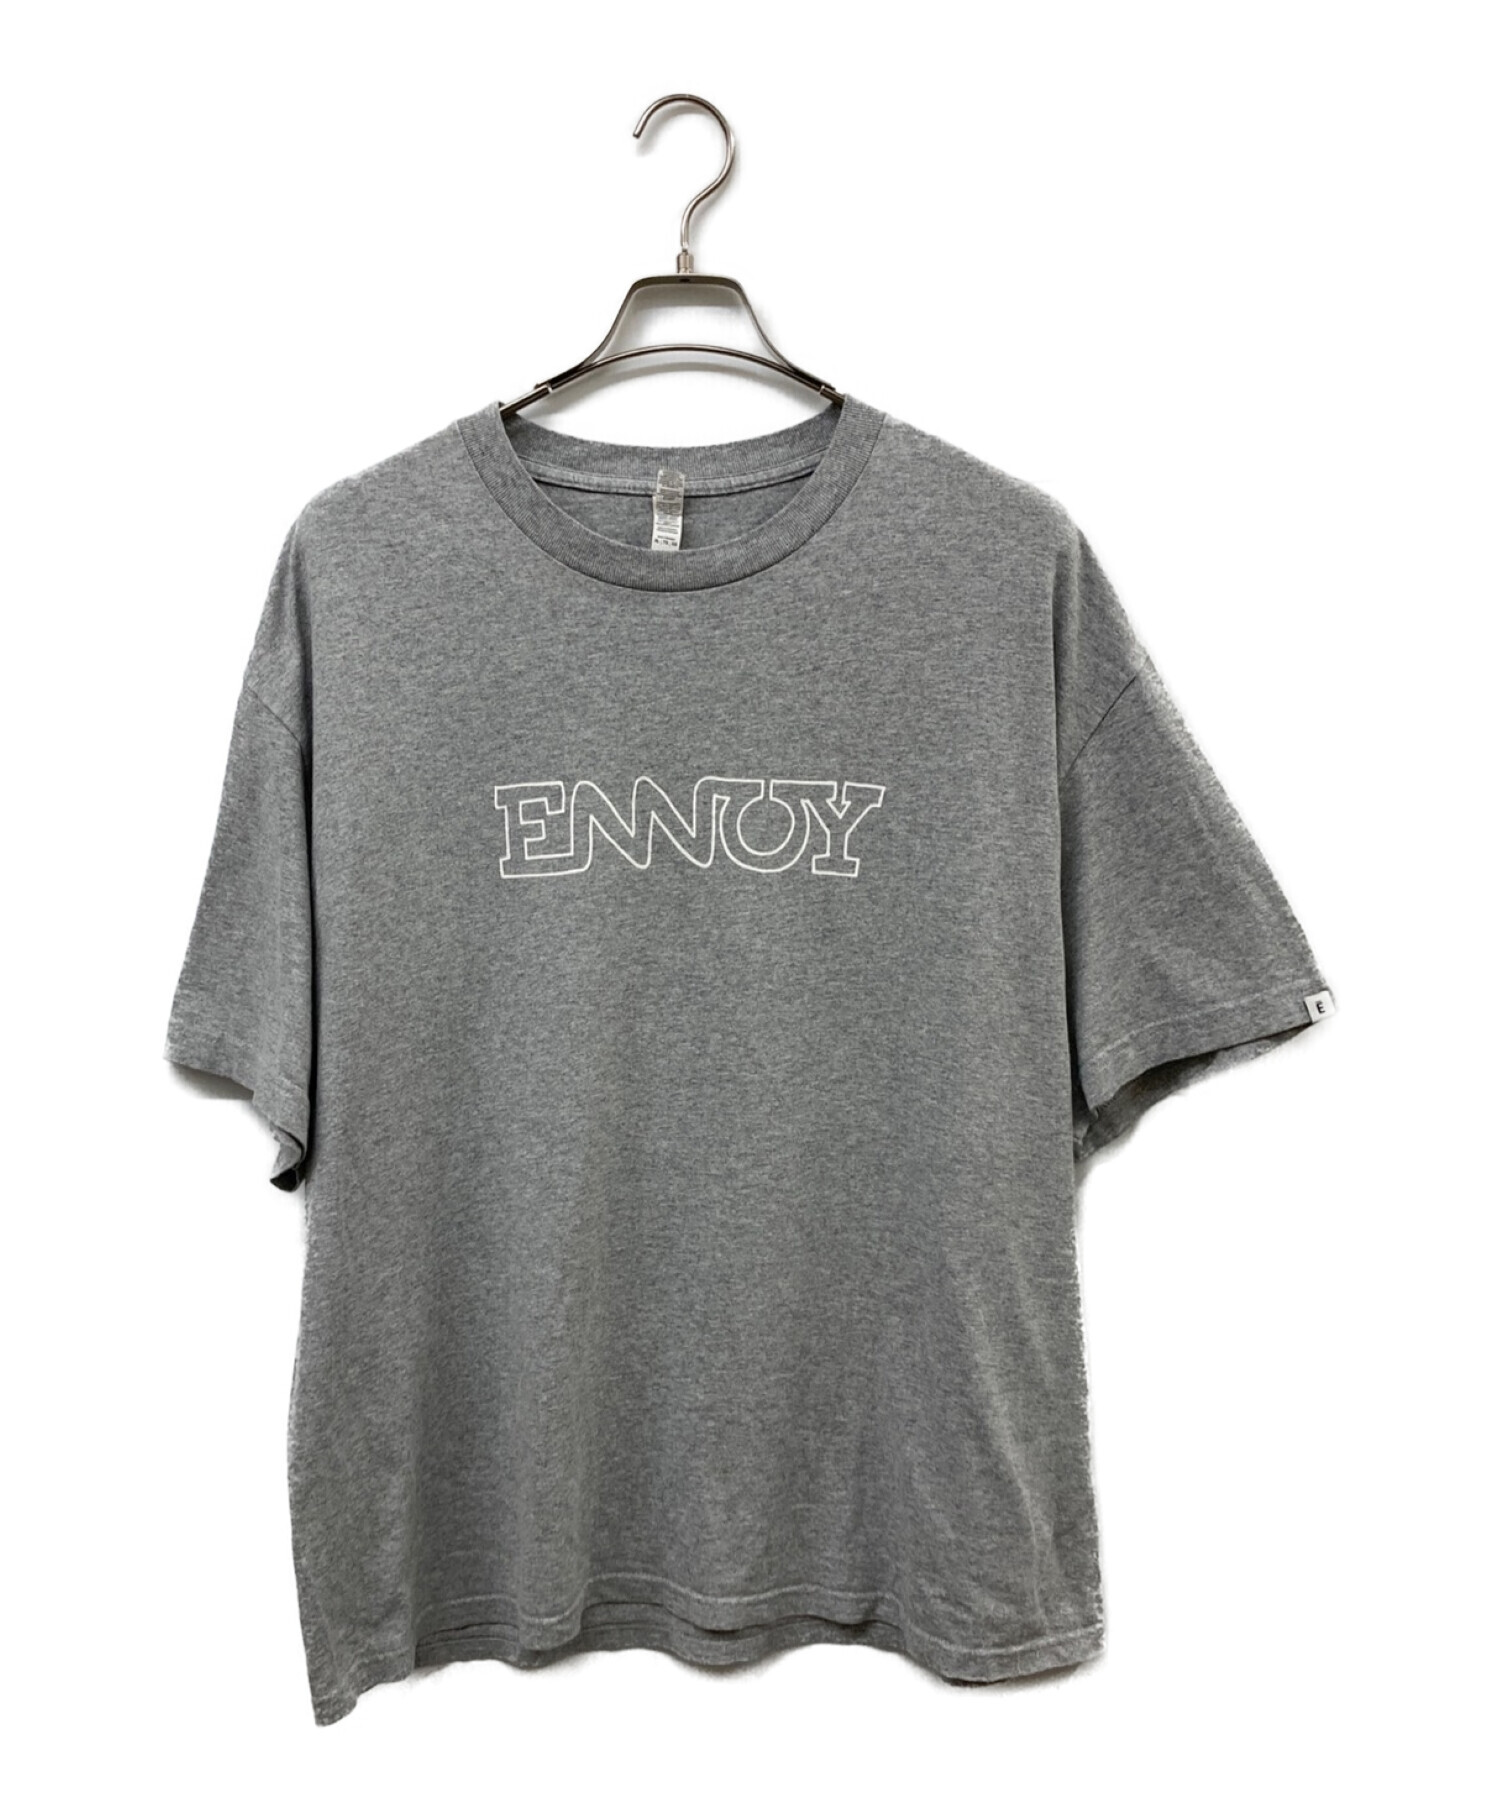 XLサイズ ENNOY PRO TEE grey エンノイ Tシャツ グレー